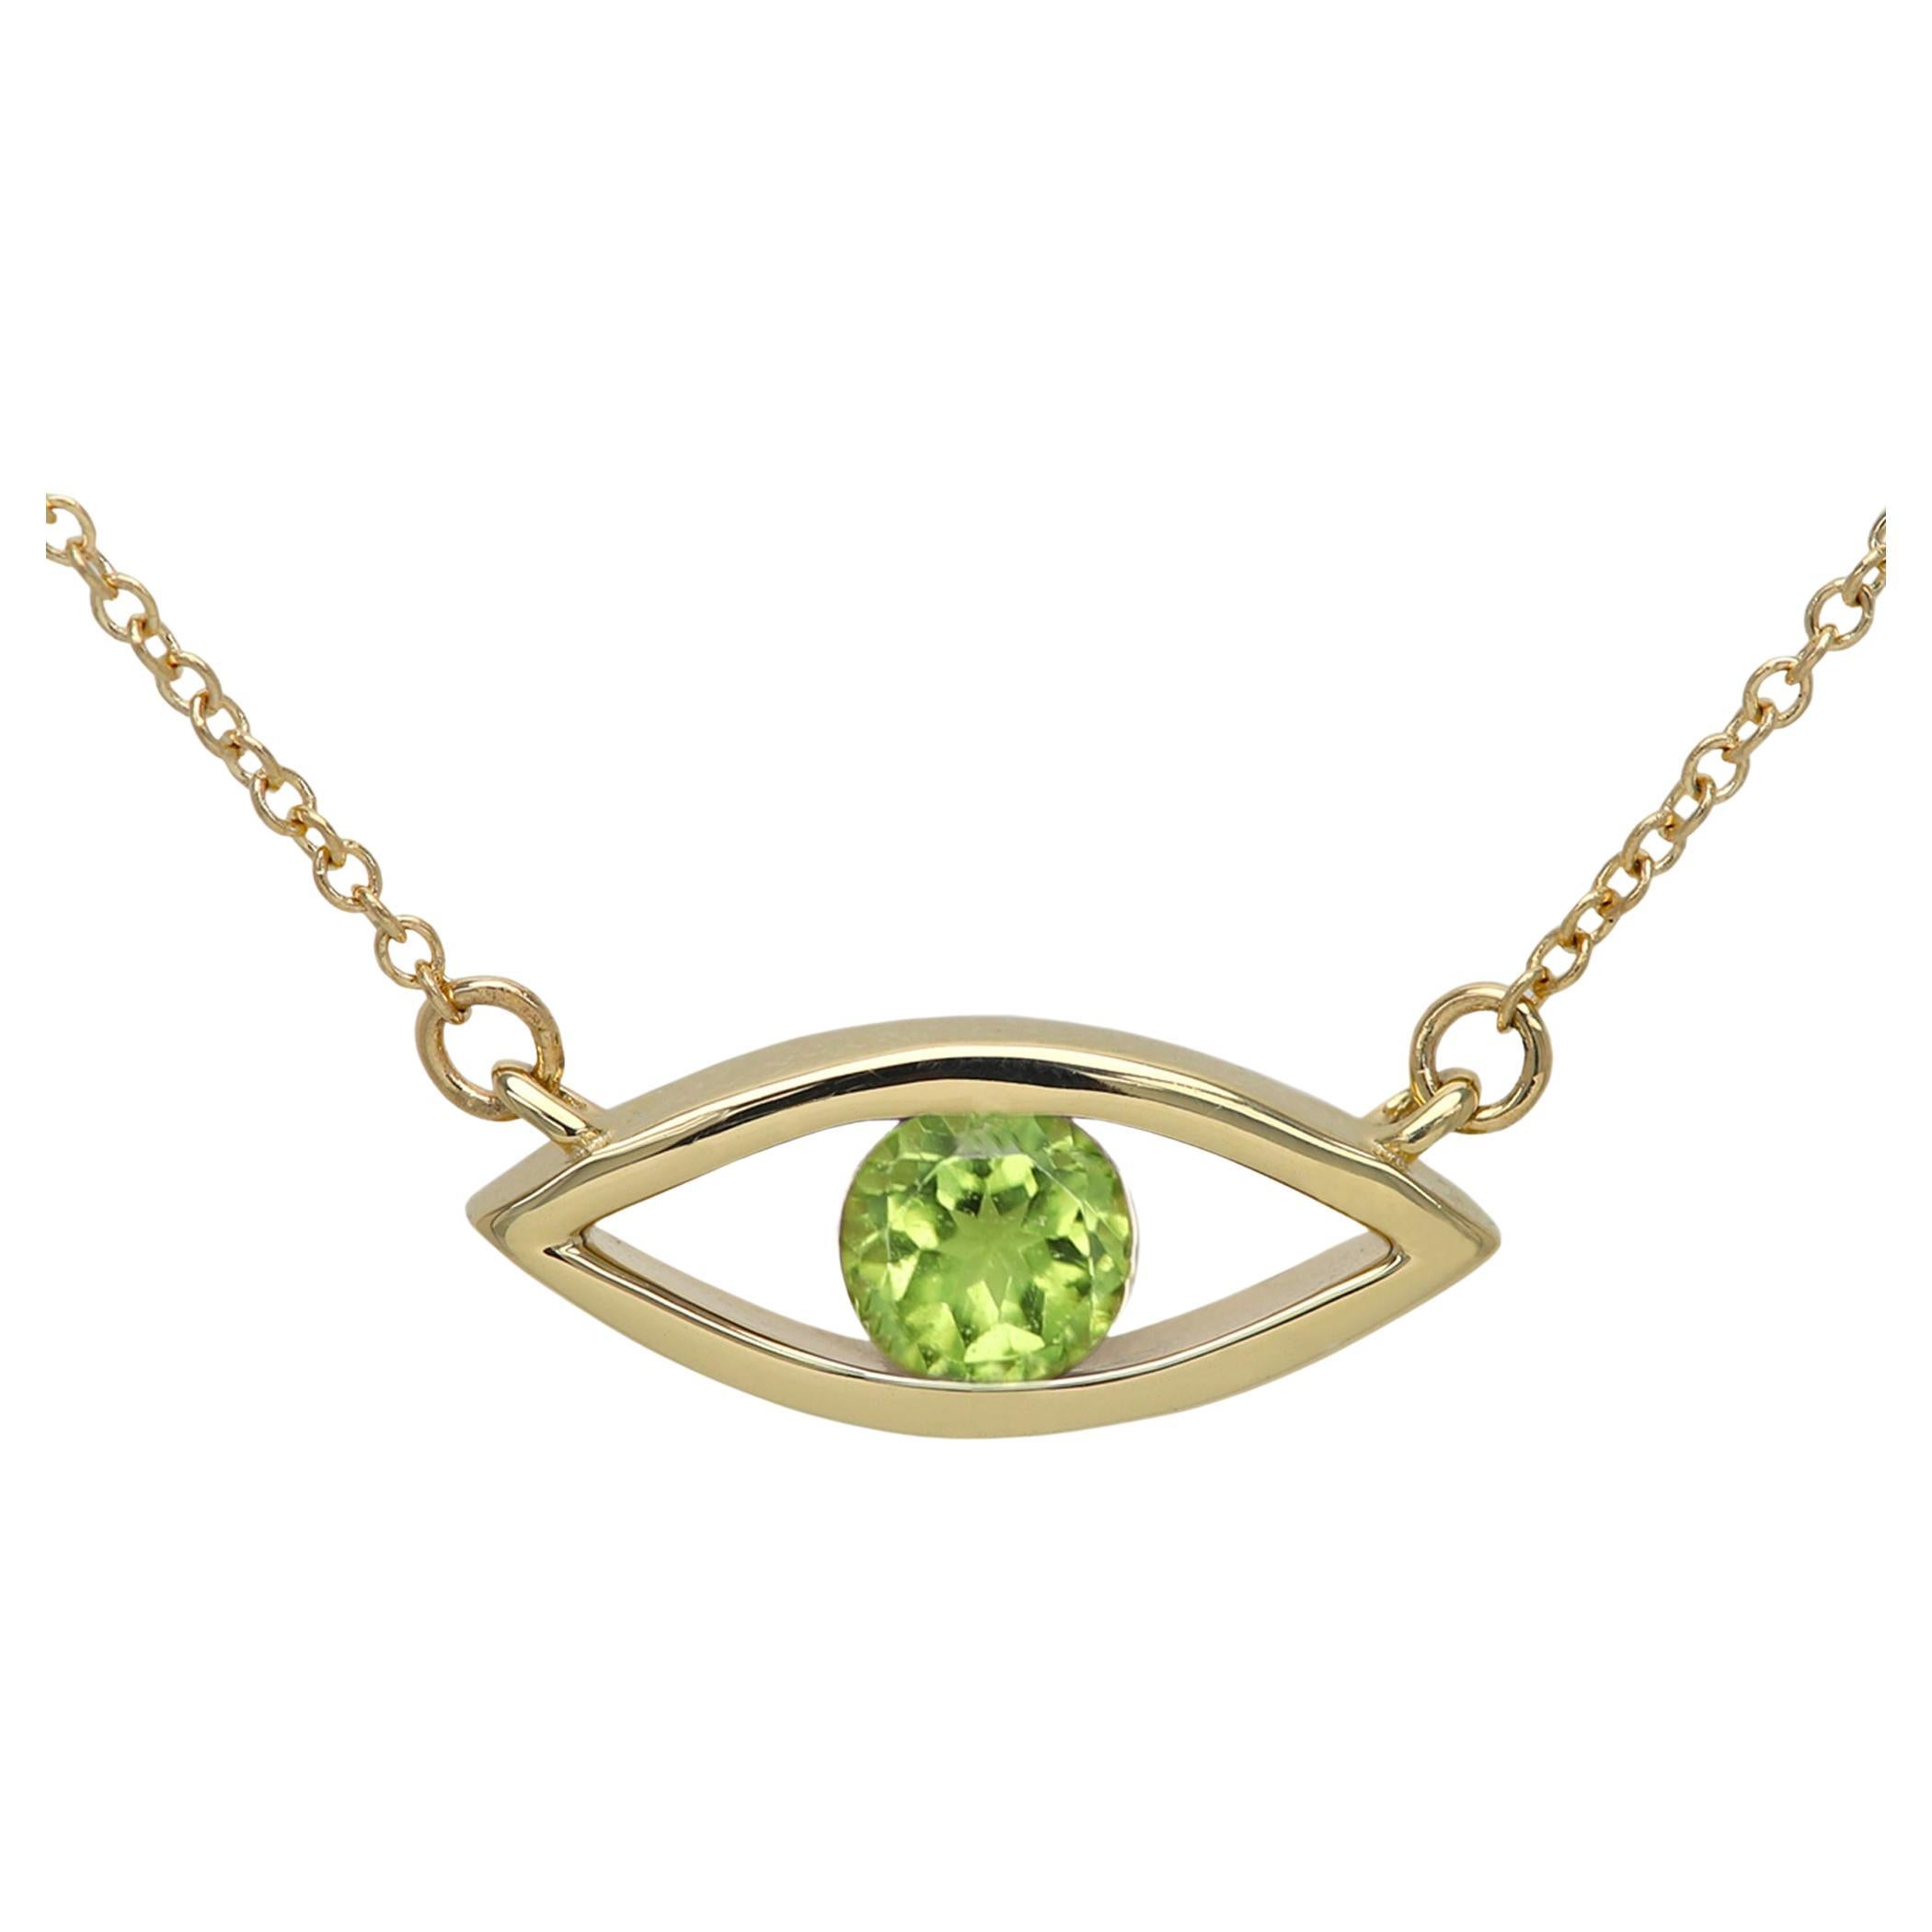 Evil Eye Necklace 14 Karat Gold Peridot Green Birthstone 0.50 Carat